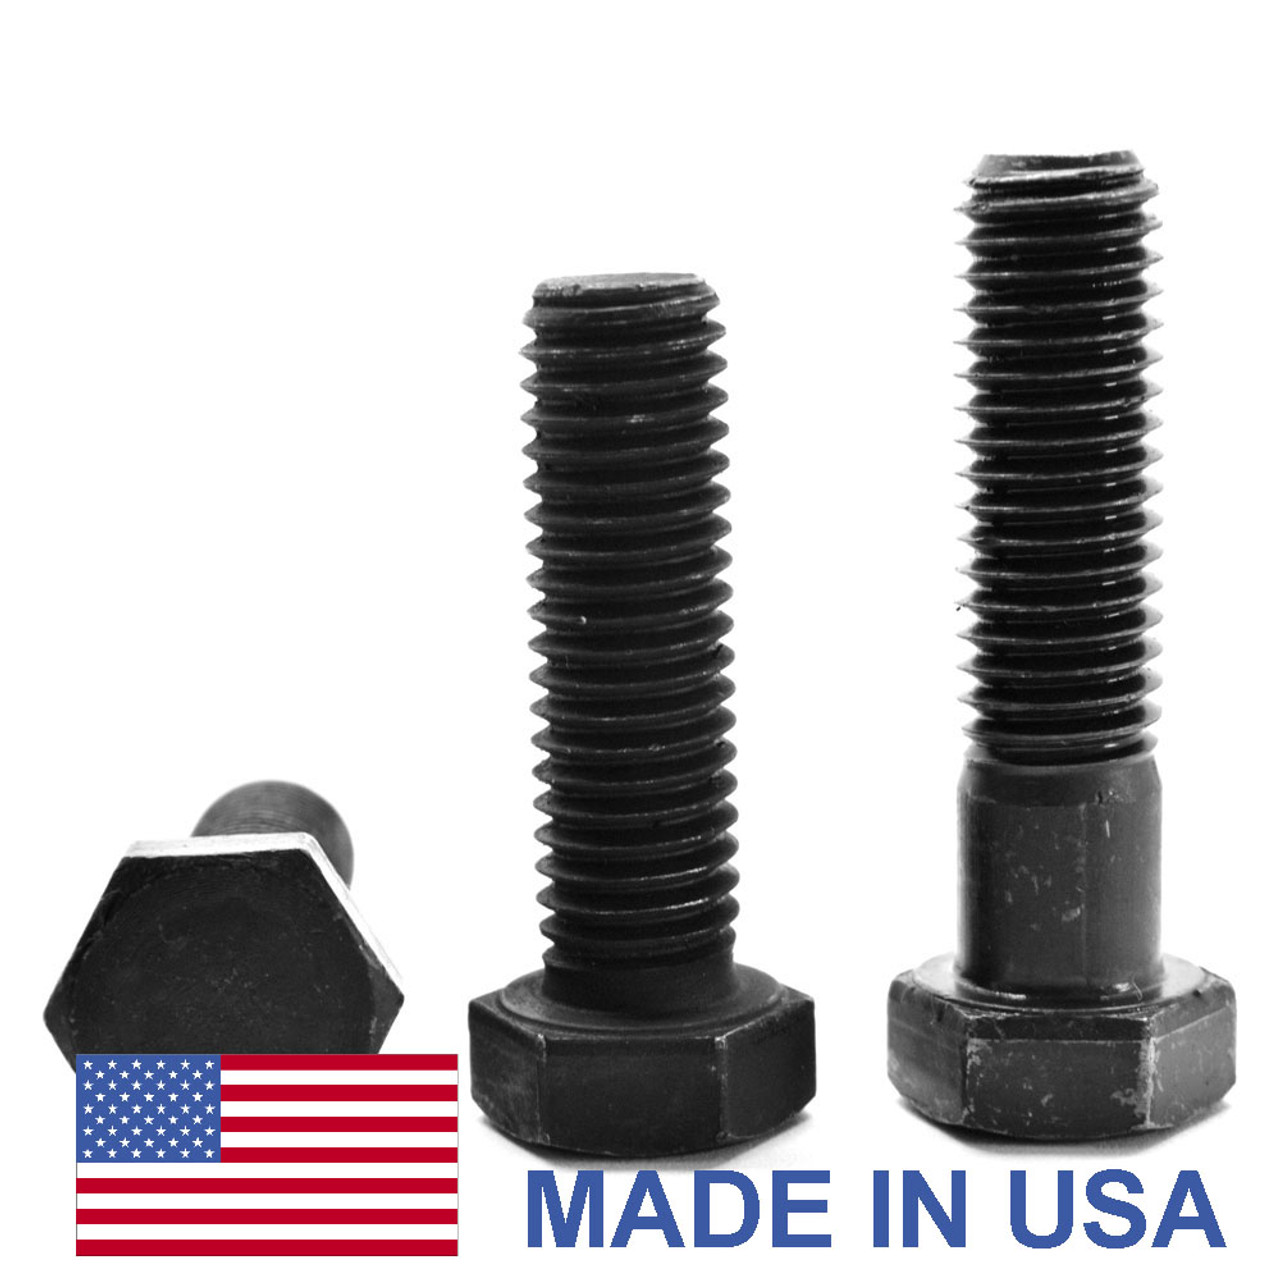 7/16"-14 x 1 3/4" (PT) Coarse Thread Grade 5 Hex Cap Screw (Bolt) - USA Medium Carbon Steel Black Oxide